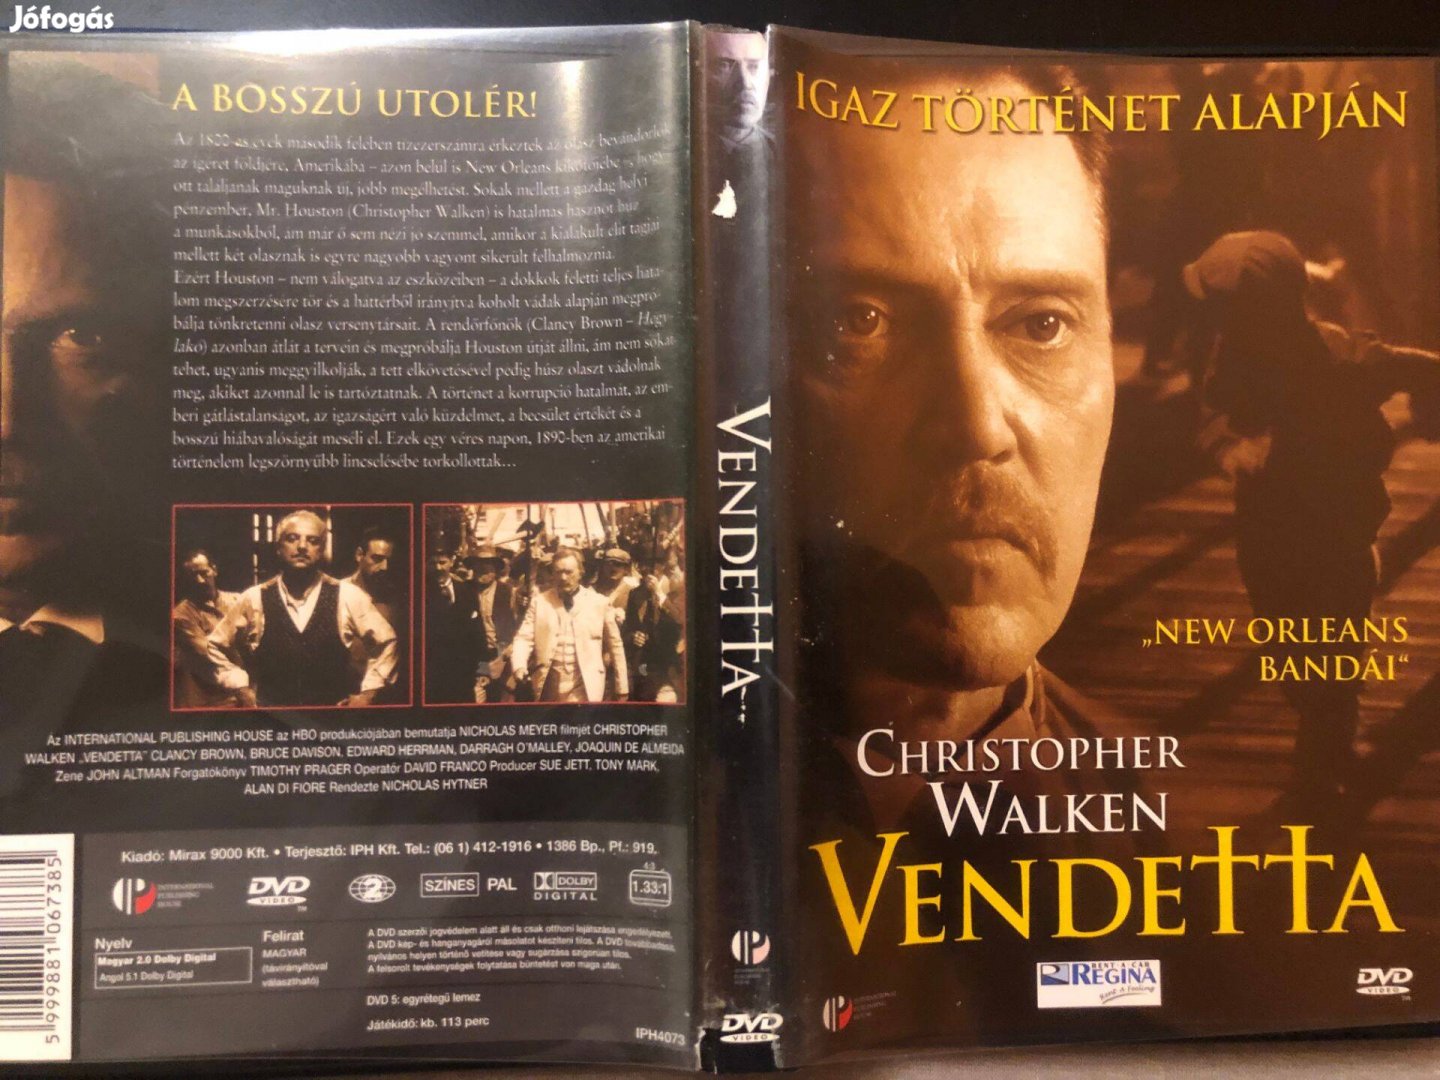 Vendetta New Orleans bandái DVD (ritkaság, Christopher Walken9